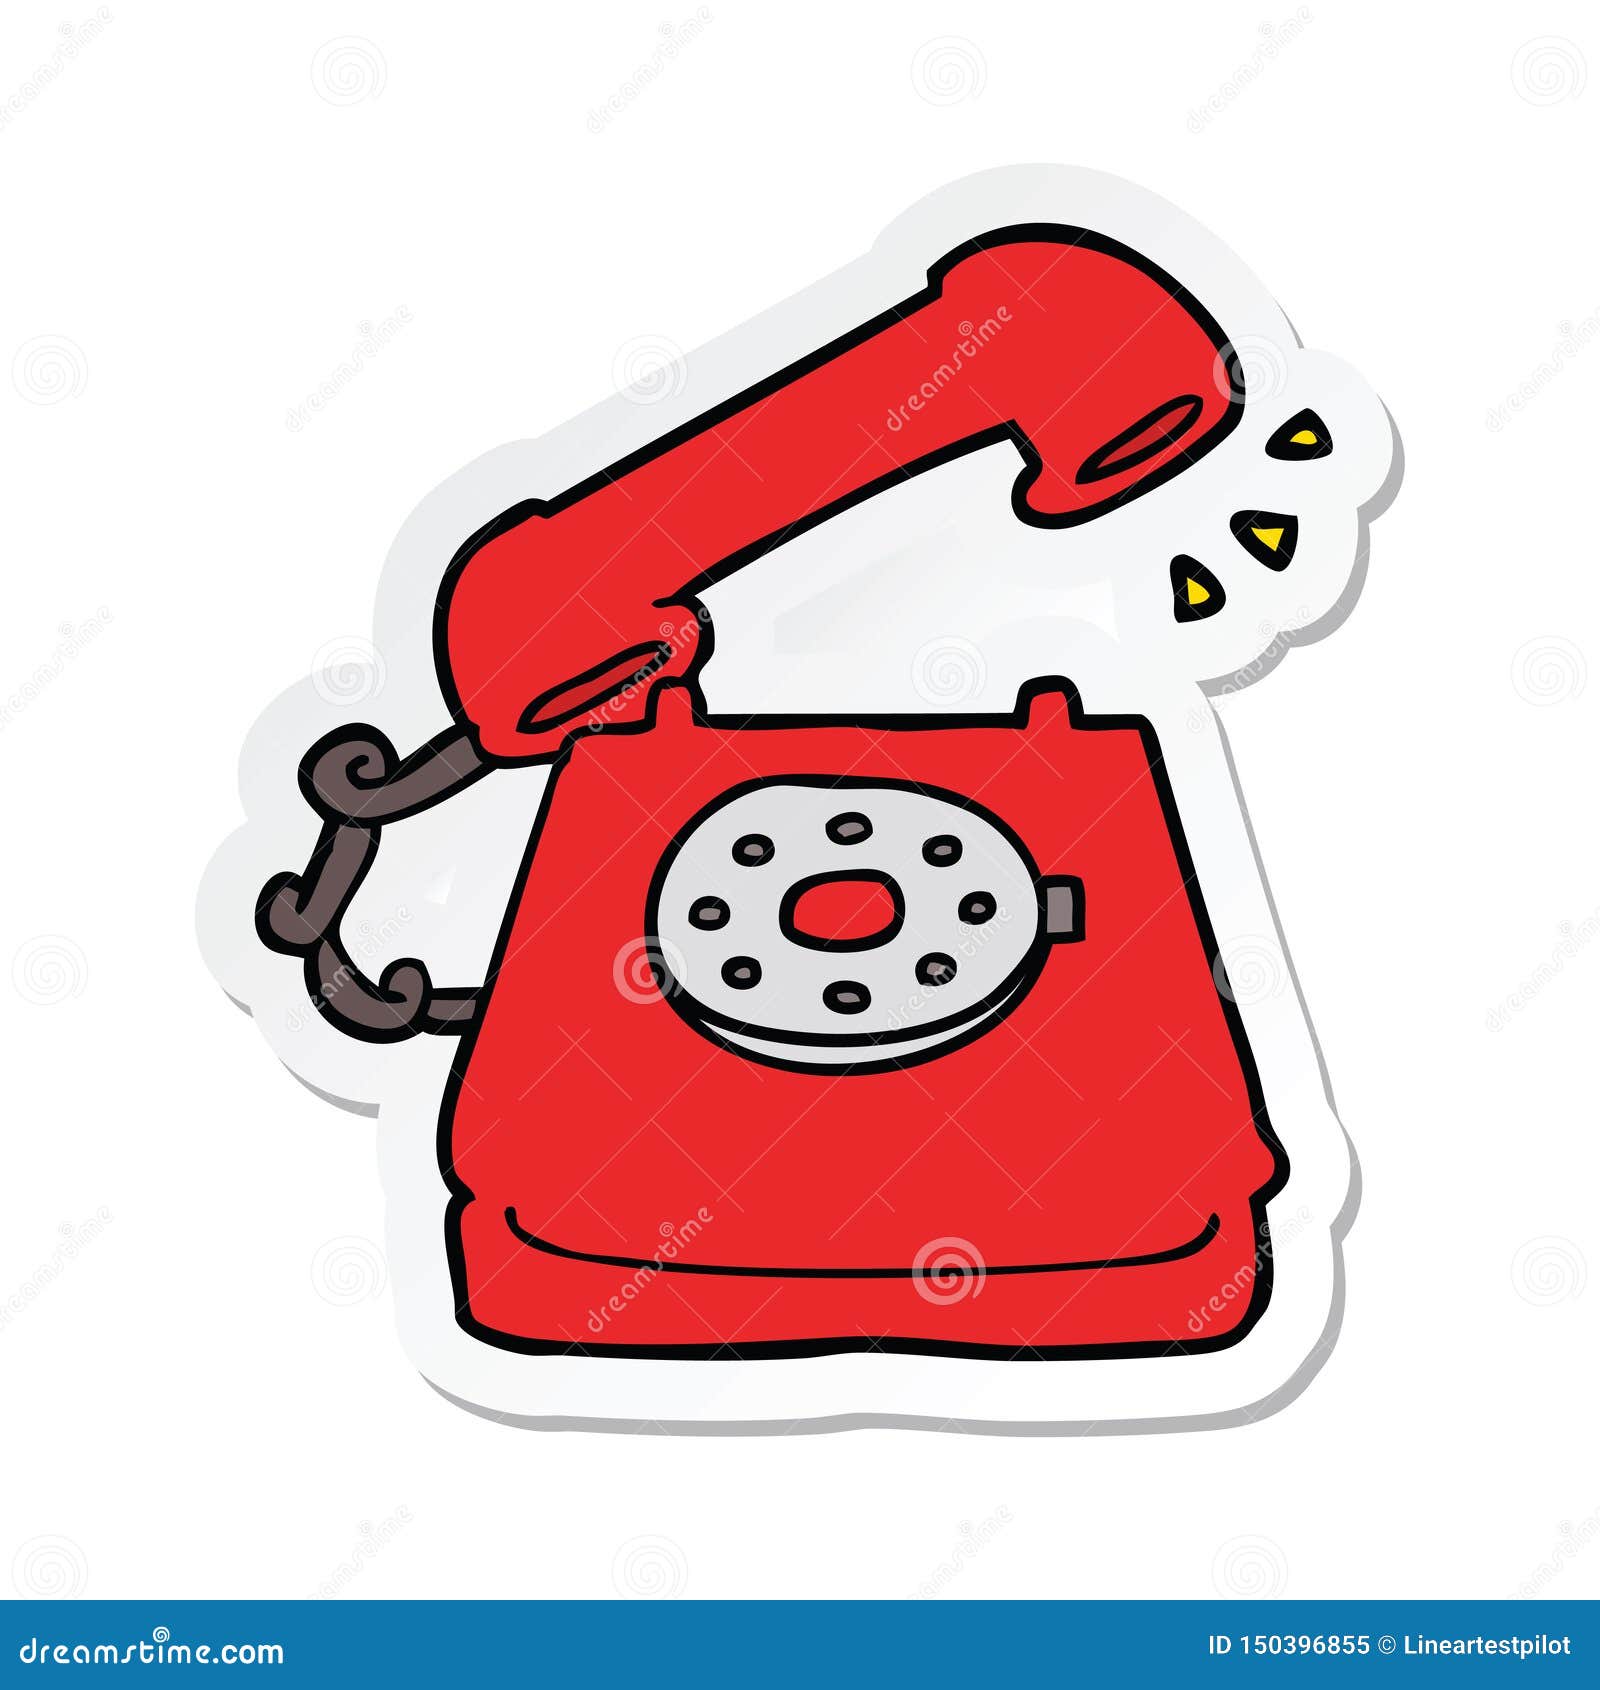 Sticker of a Cartoon Old Telephone Stock Vector - Illustration of cartoon,  artwork: 150396855